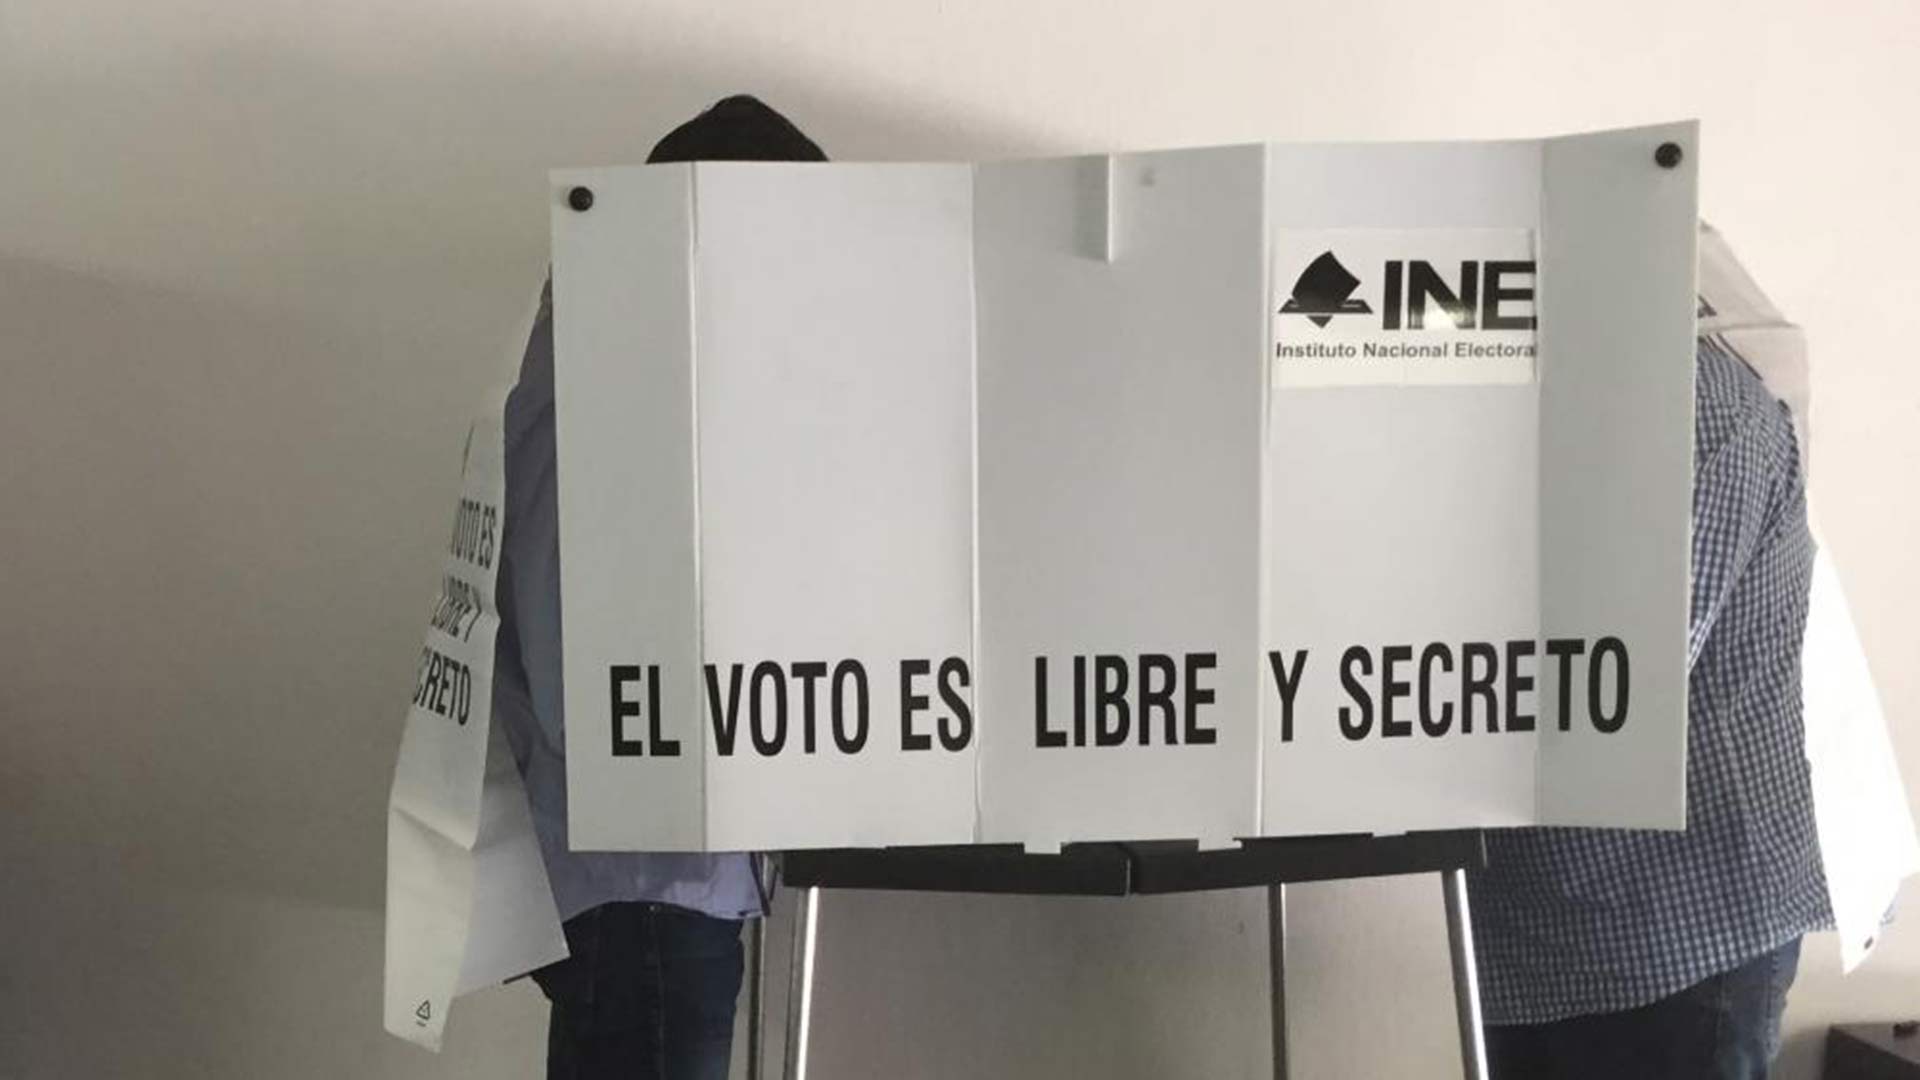 libre secreto election